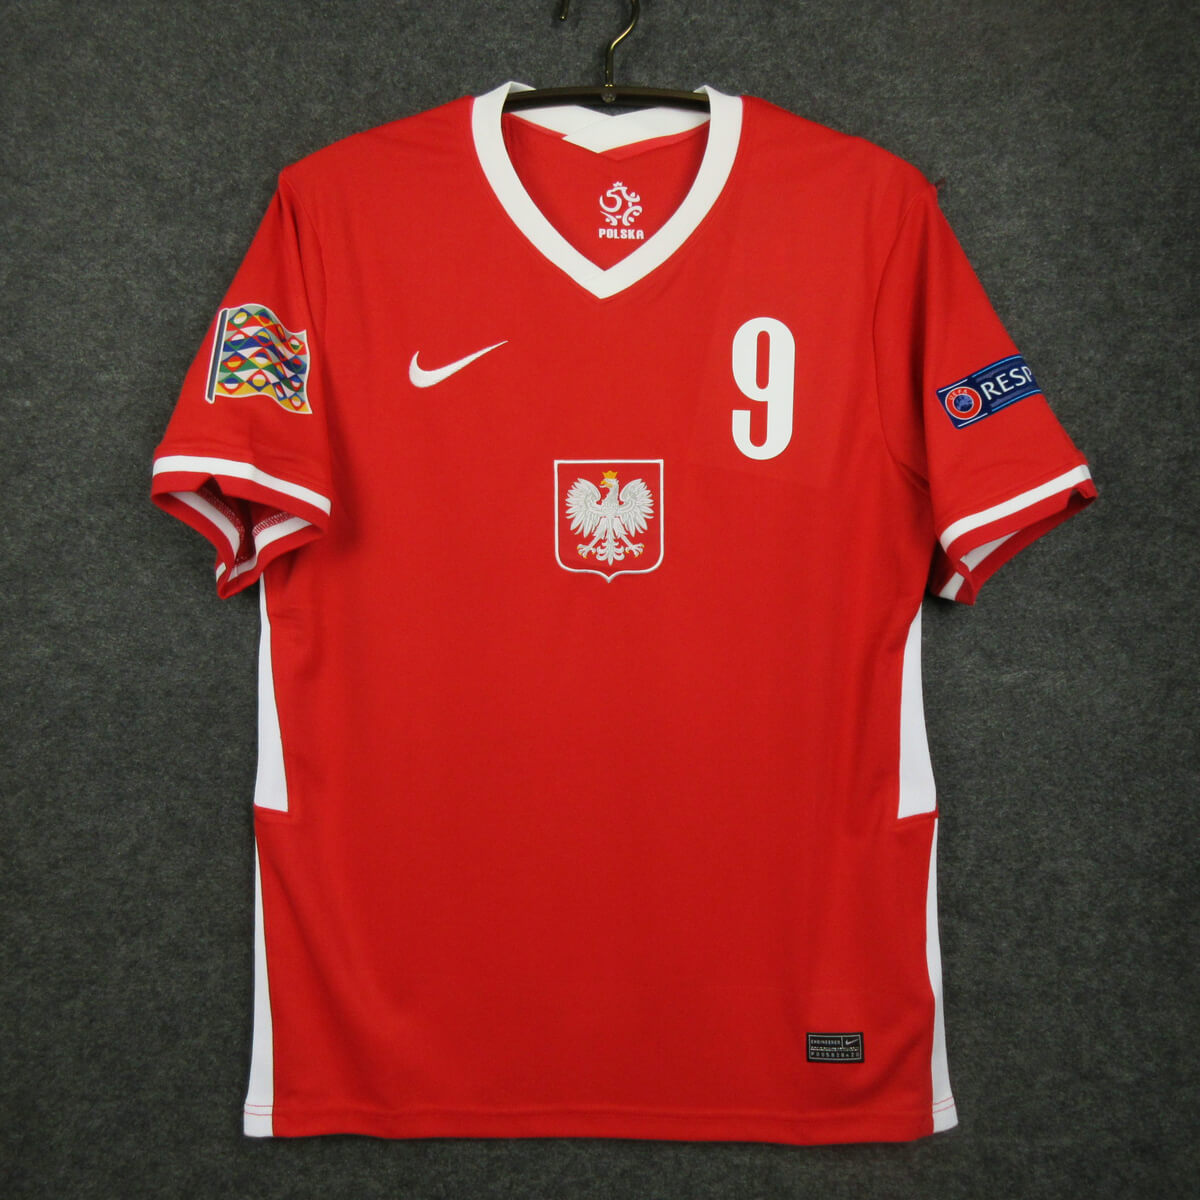 The Newkits |Buy Poland 2020 Home Kit Fan Version| Football Jersey